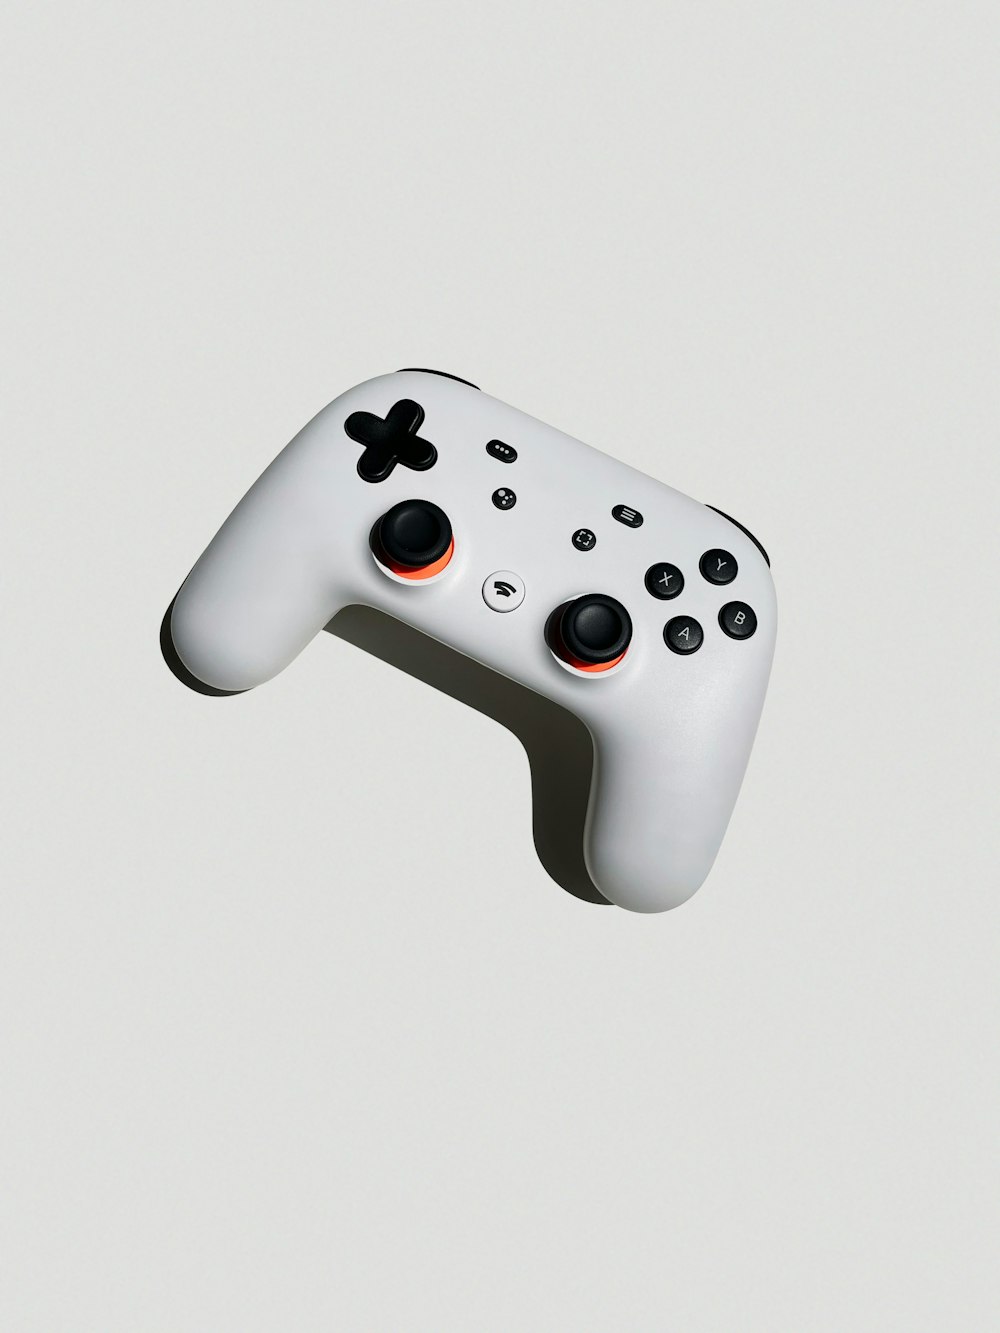 a white video game controller